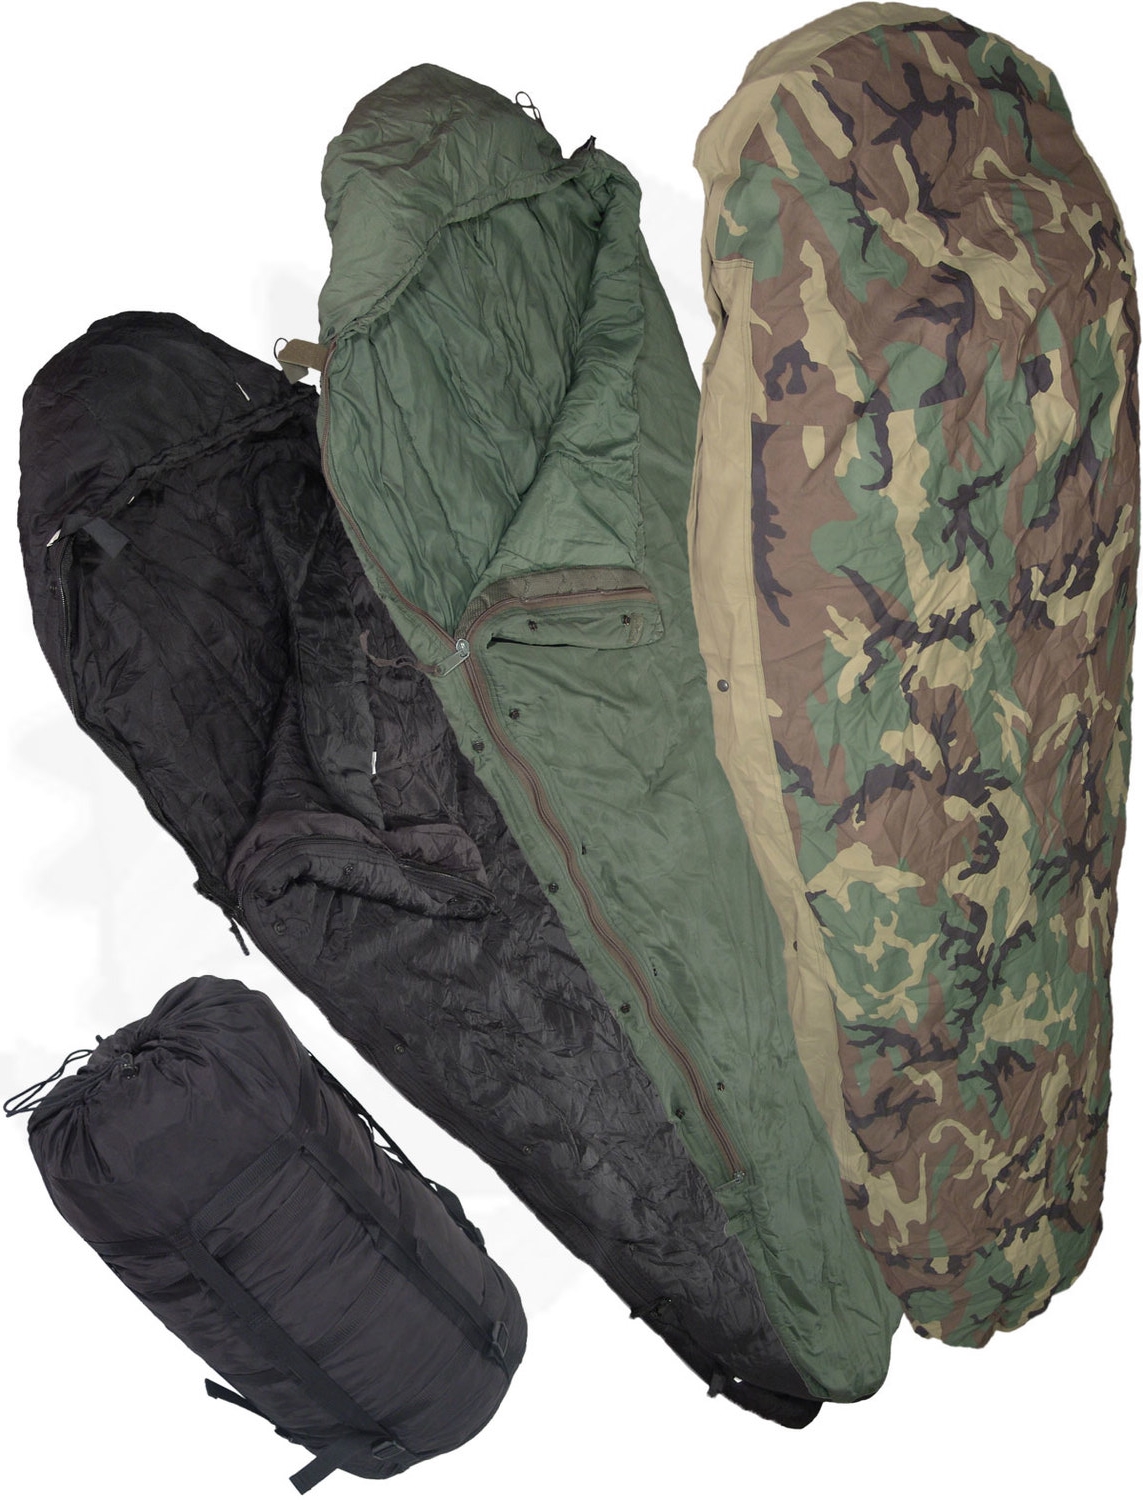 NEW condition US Military 4 Piece Modular Sleeping Bag Sleep System 